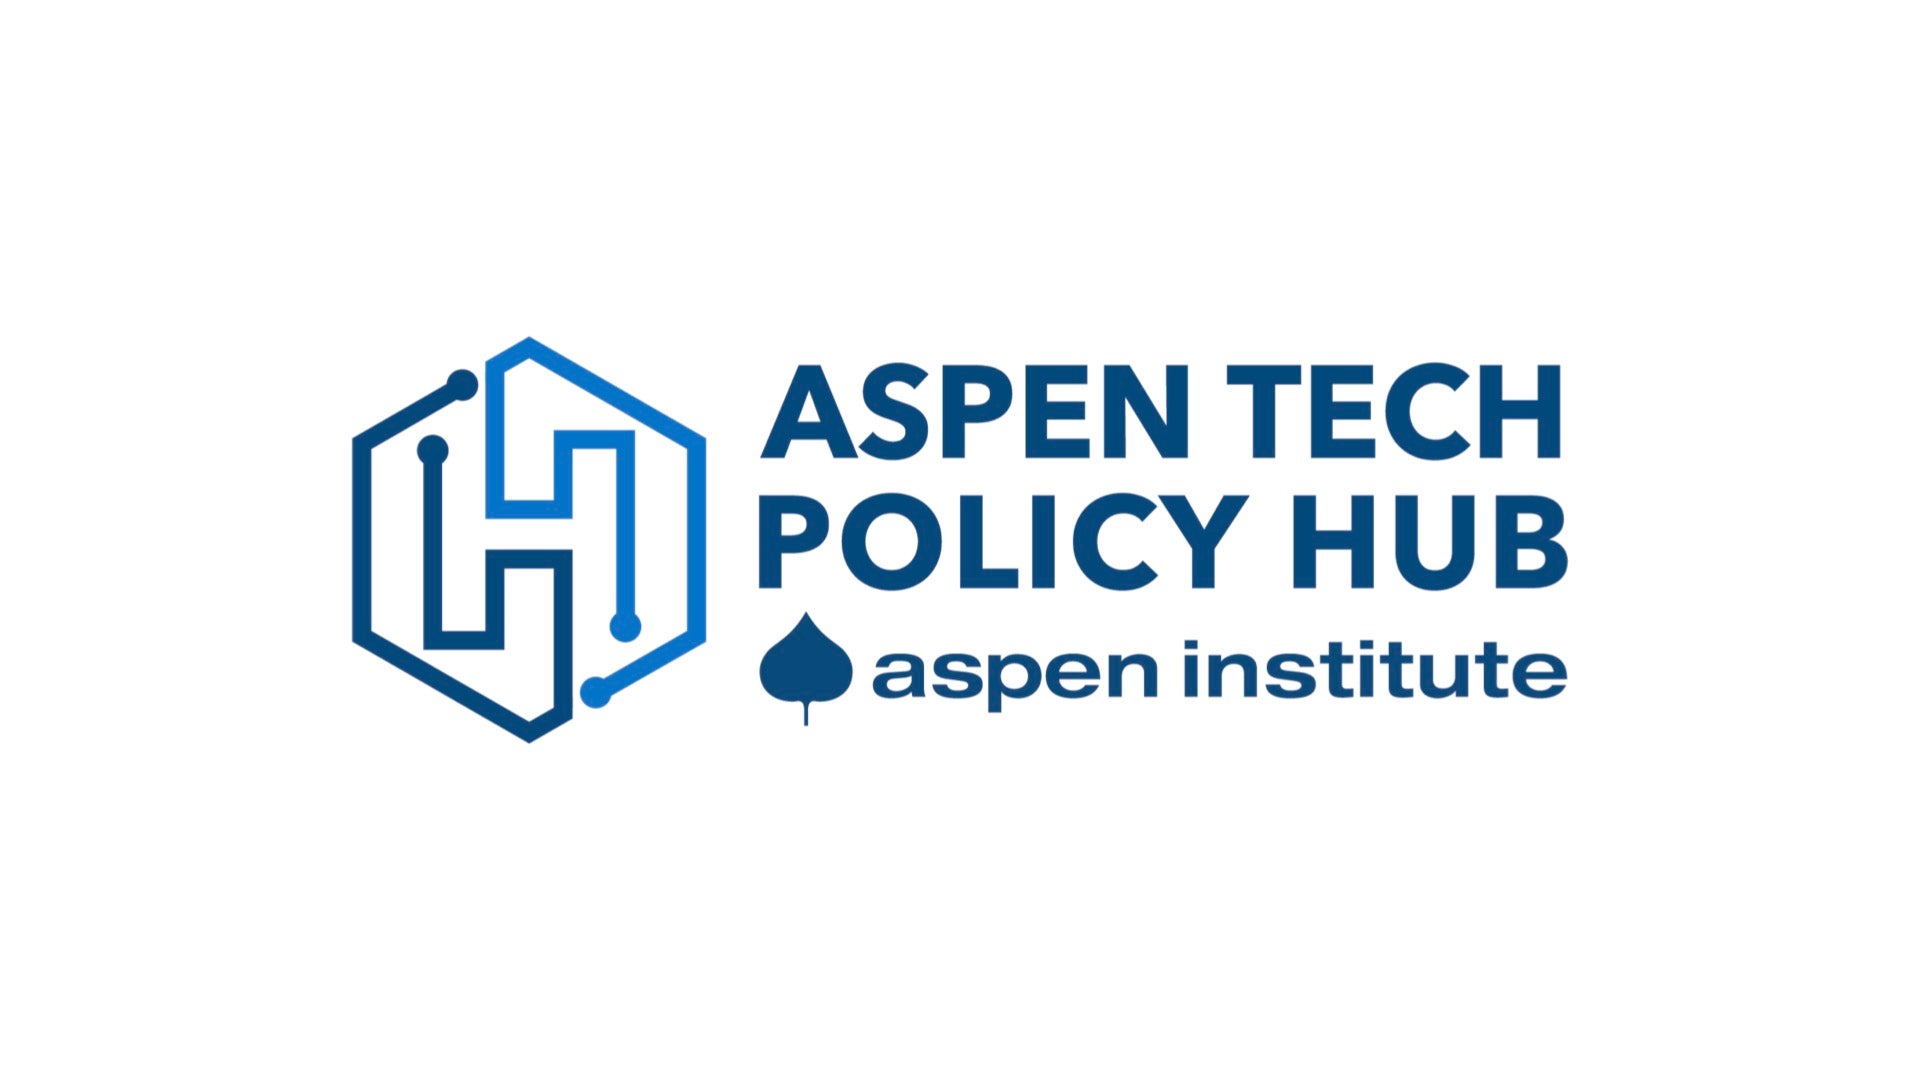 Aspen Tech Policy Hub Press Release - Card Image